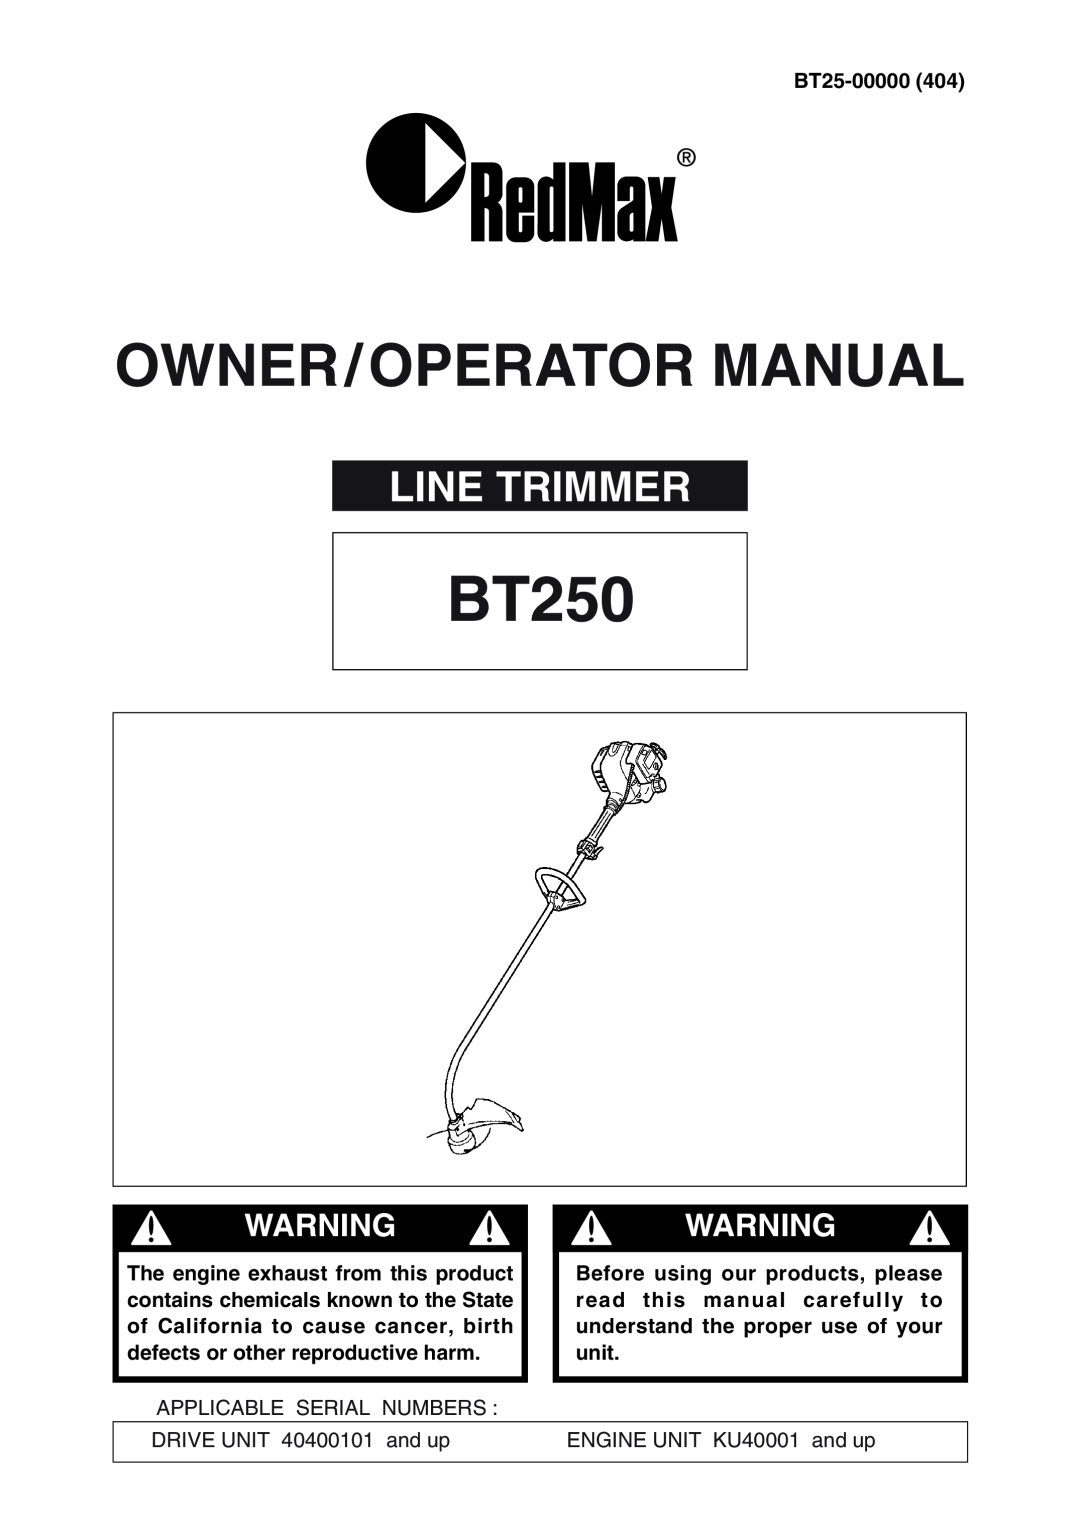 RedMax BT250 manual Line Trimmer, Owner/Operator Manual, Warningwarning 